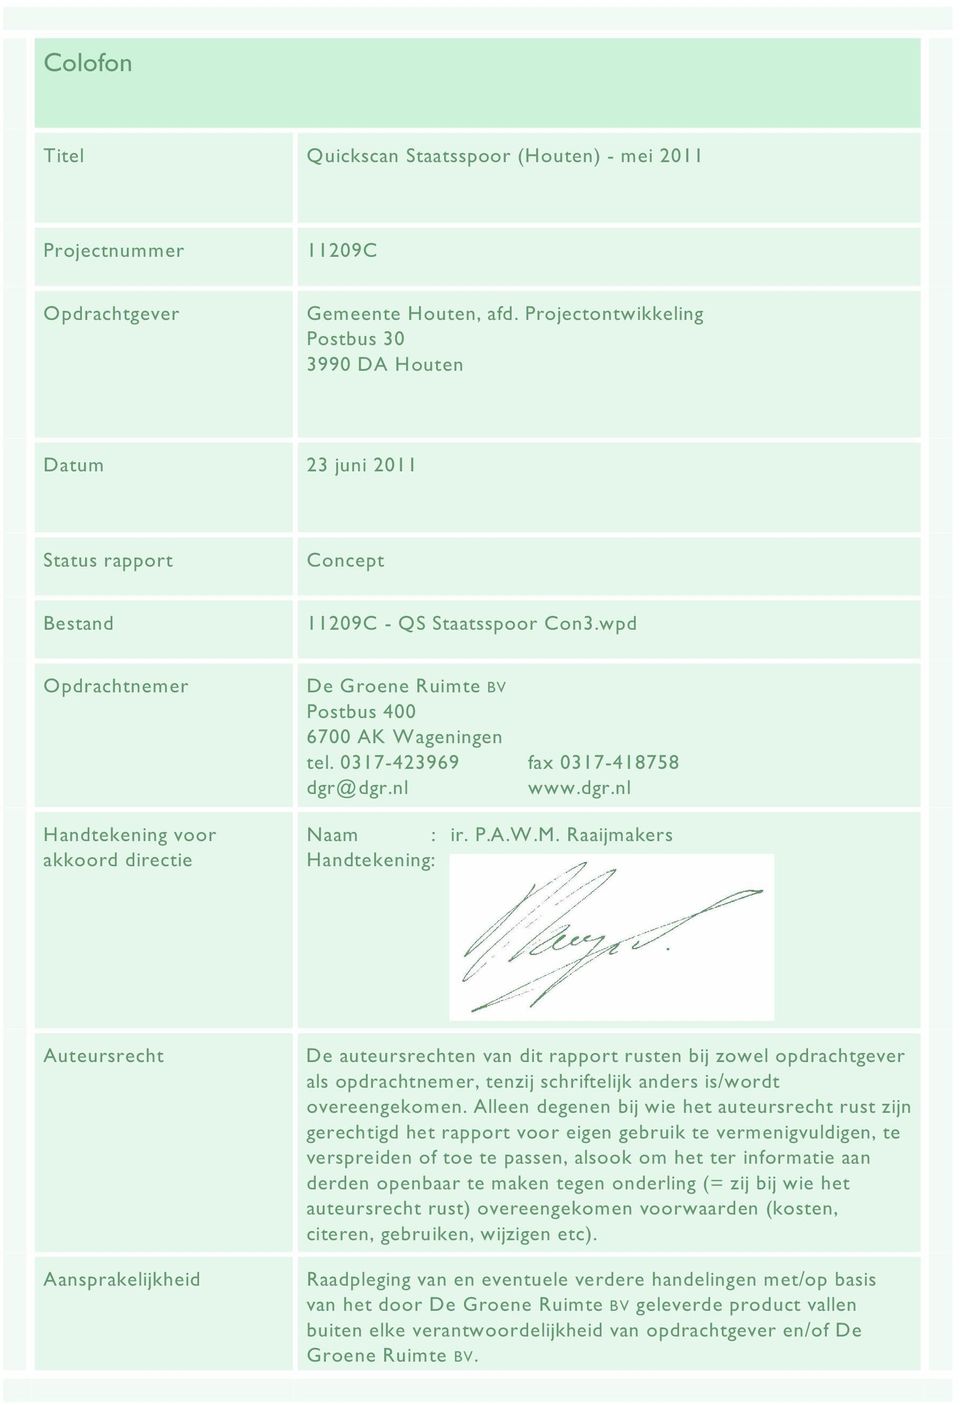 wpd Opdrachtnemer Handtekening voor akkoord directie De Groene Ruimte BV Postbus 400 6700 AK Wageningen tel. 0317-423969 fax 0317-418758 dgr@dgr.nl www.dgr.nl Naam : ir. P.A.W.M.